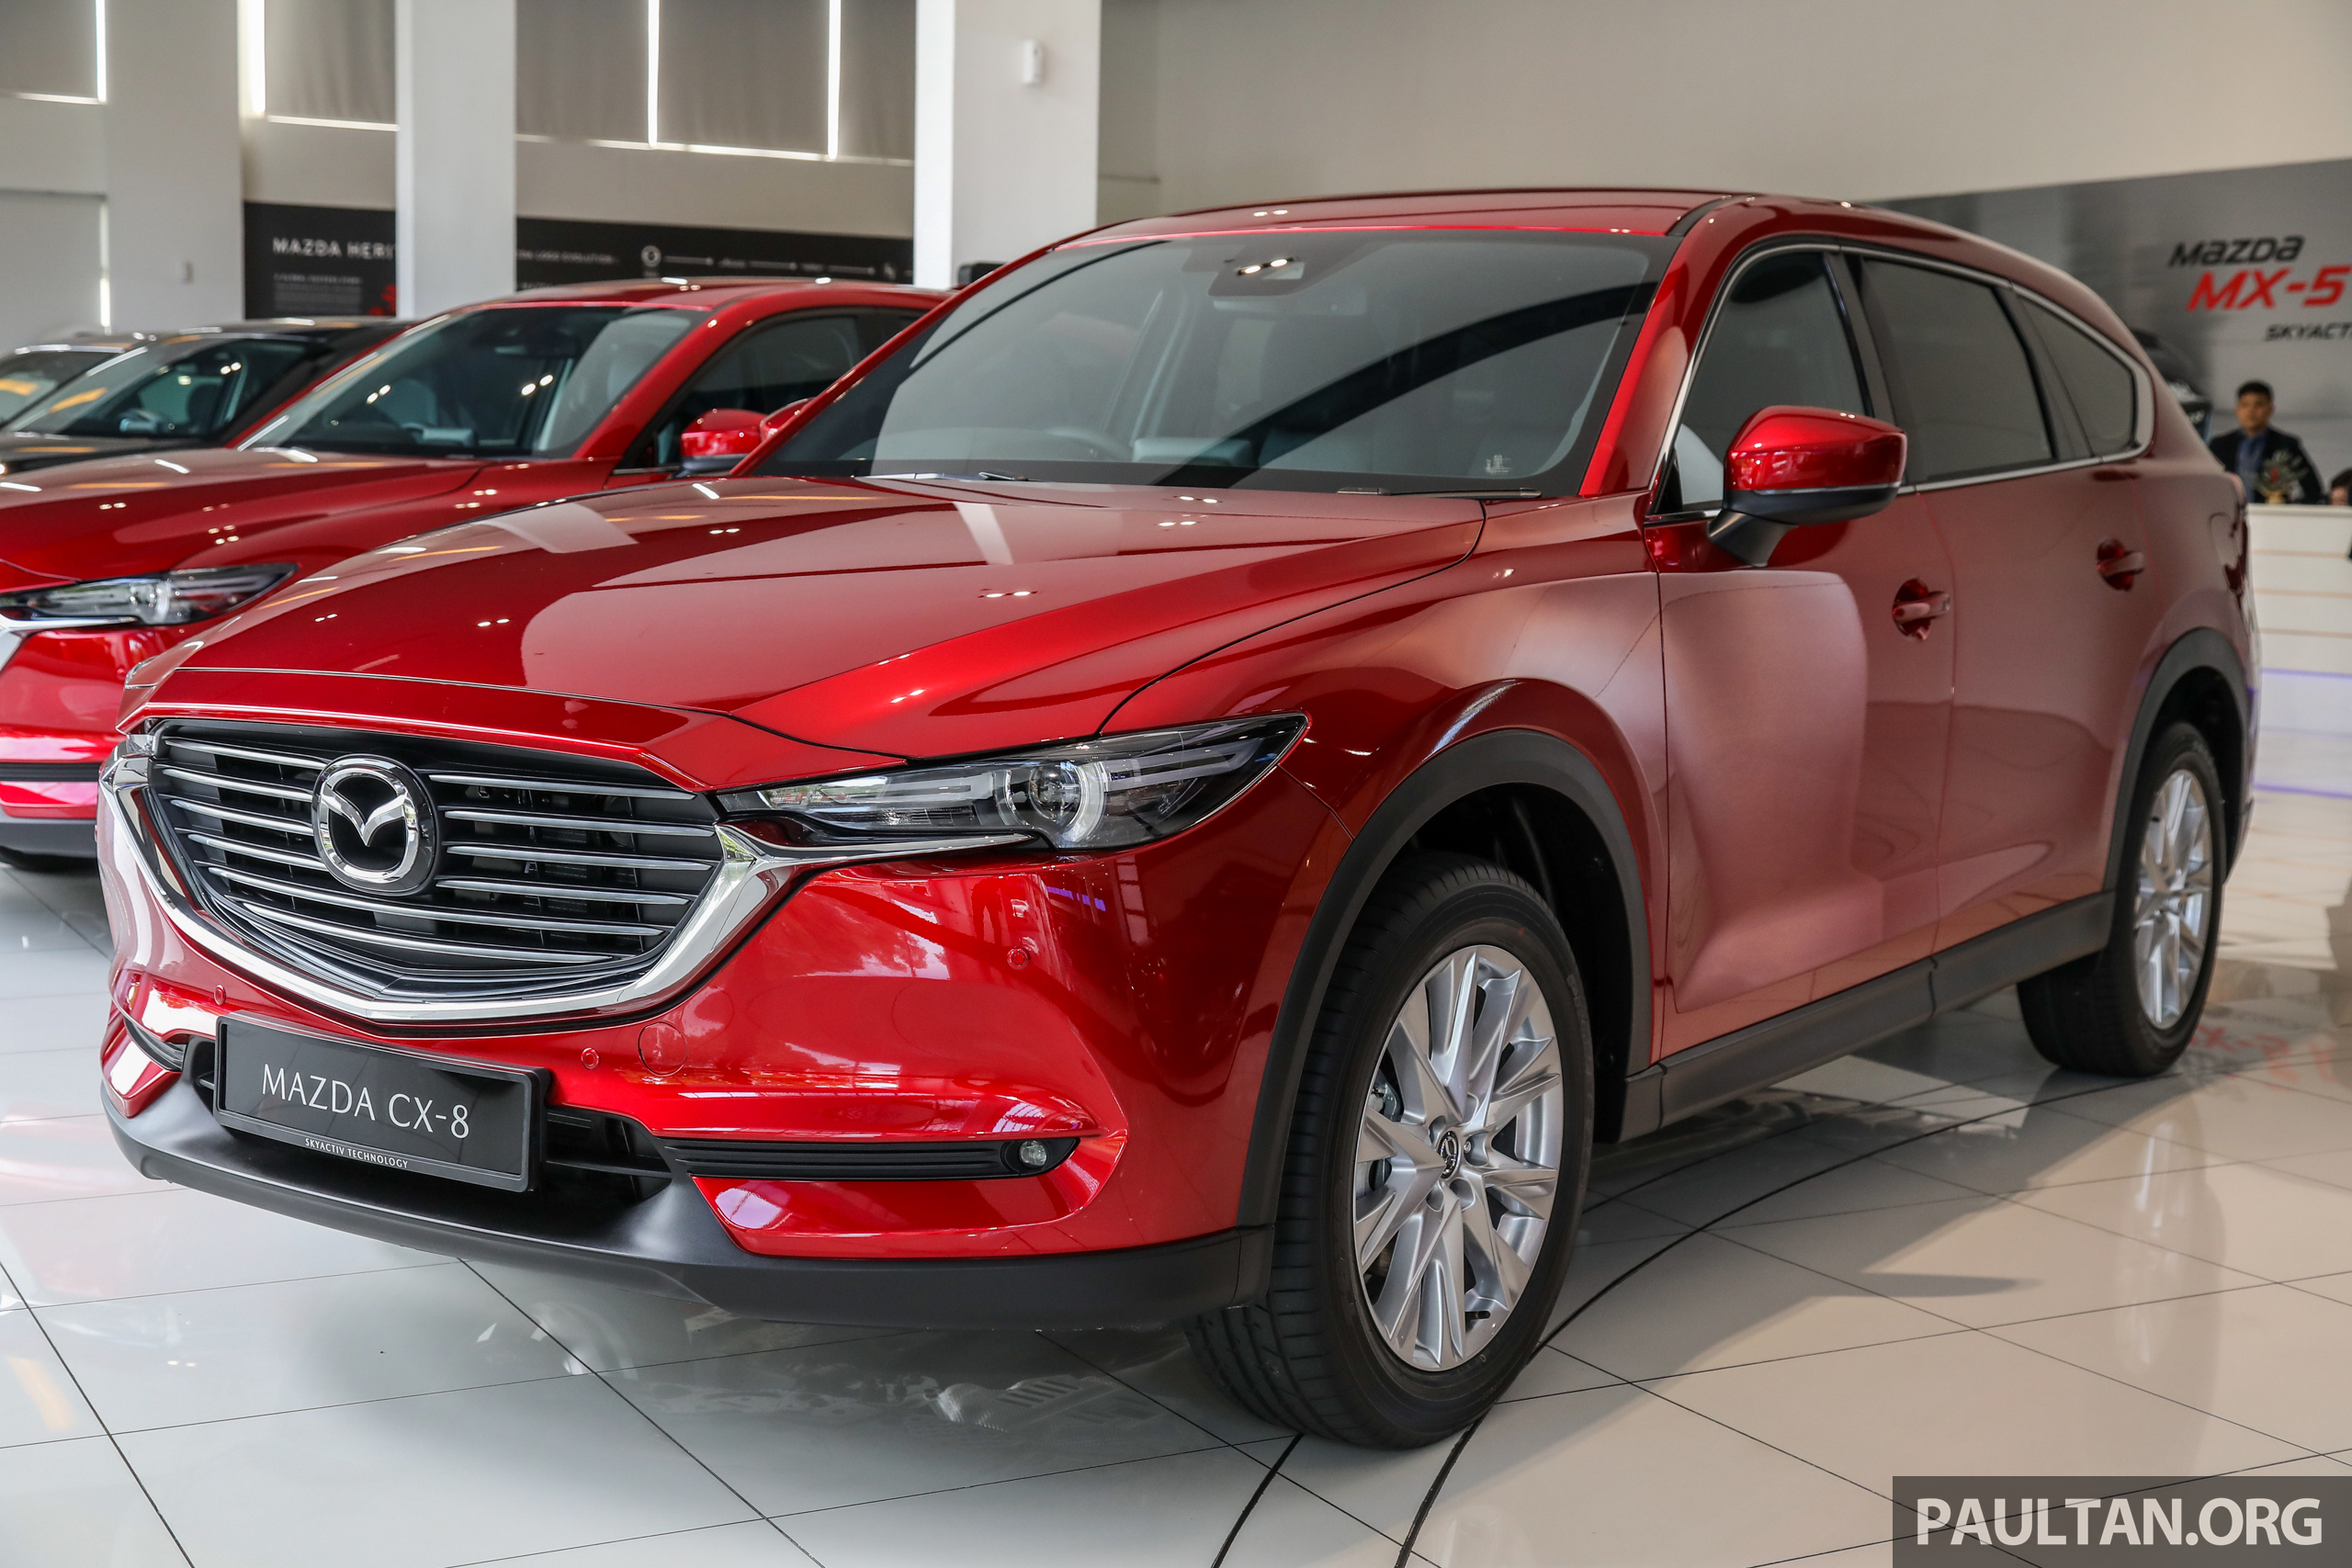 2019 Mazda CX8 CKD Malaysia_Ext1 Paul Tan's Automotive News